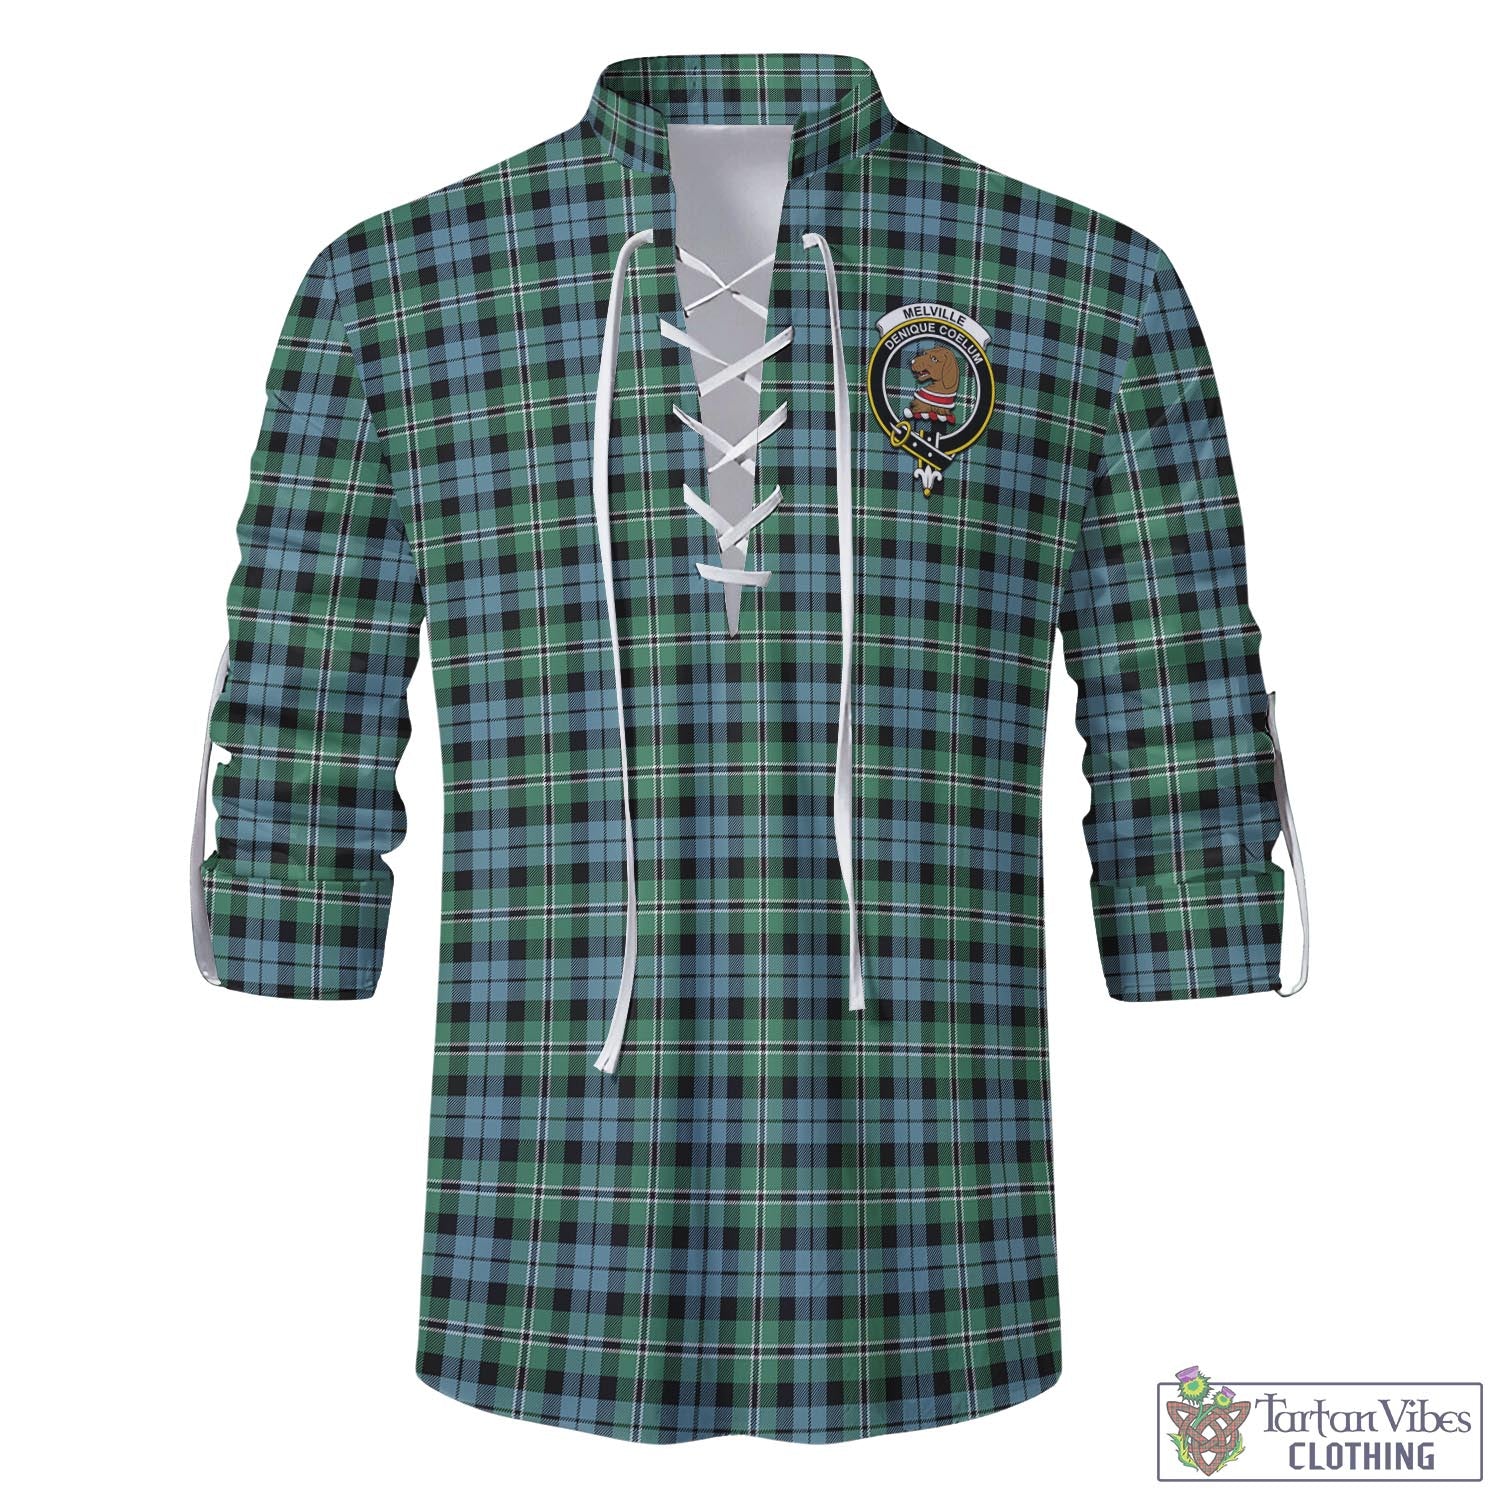 Tartan Vibes Clothing Melville Ancient Tartan Men's Scottish Traditional Jacobite Ghillie Kilt Shirt with Family Crest